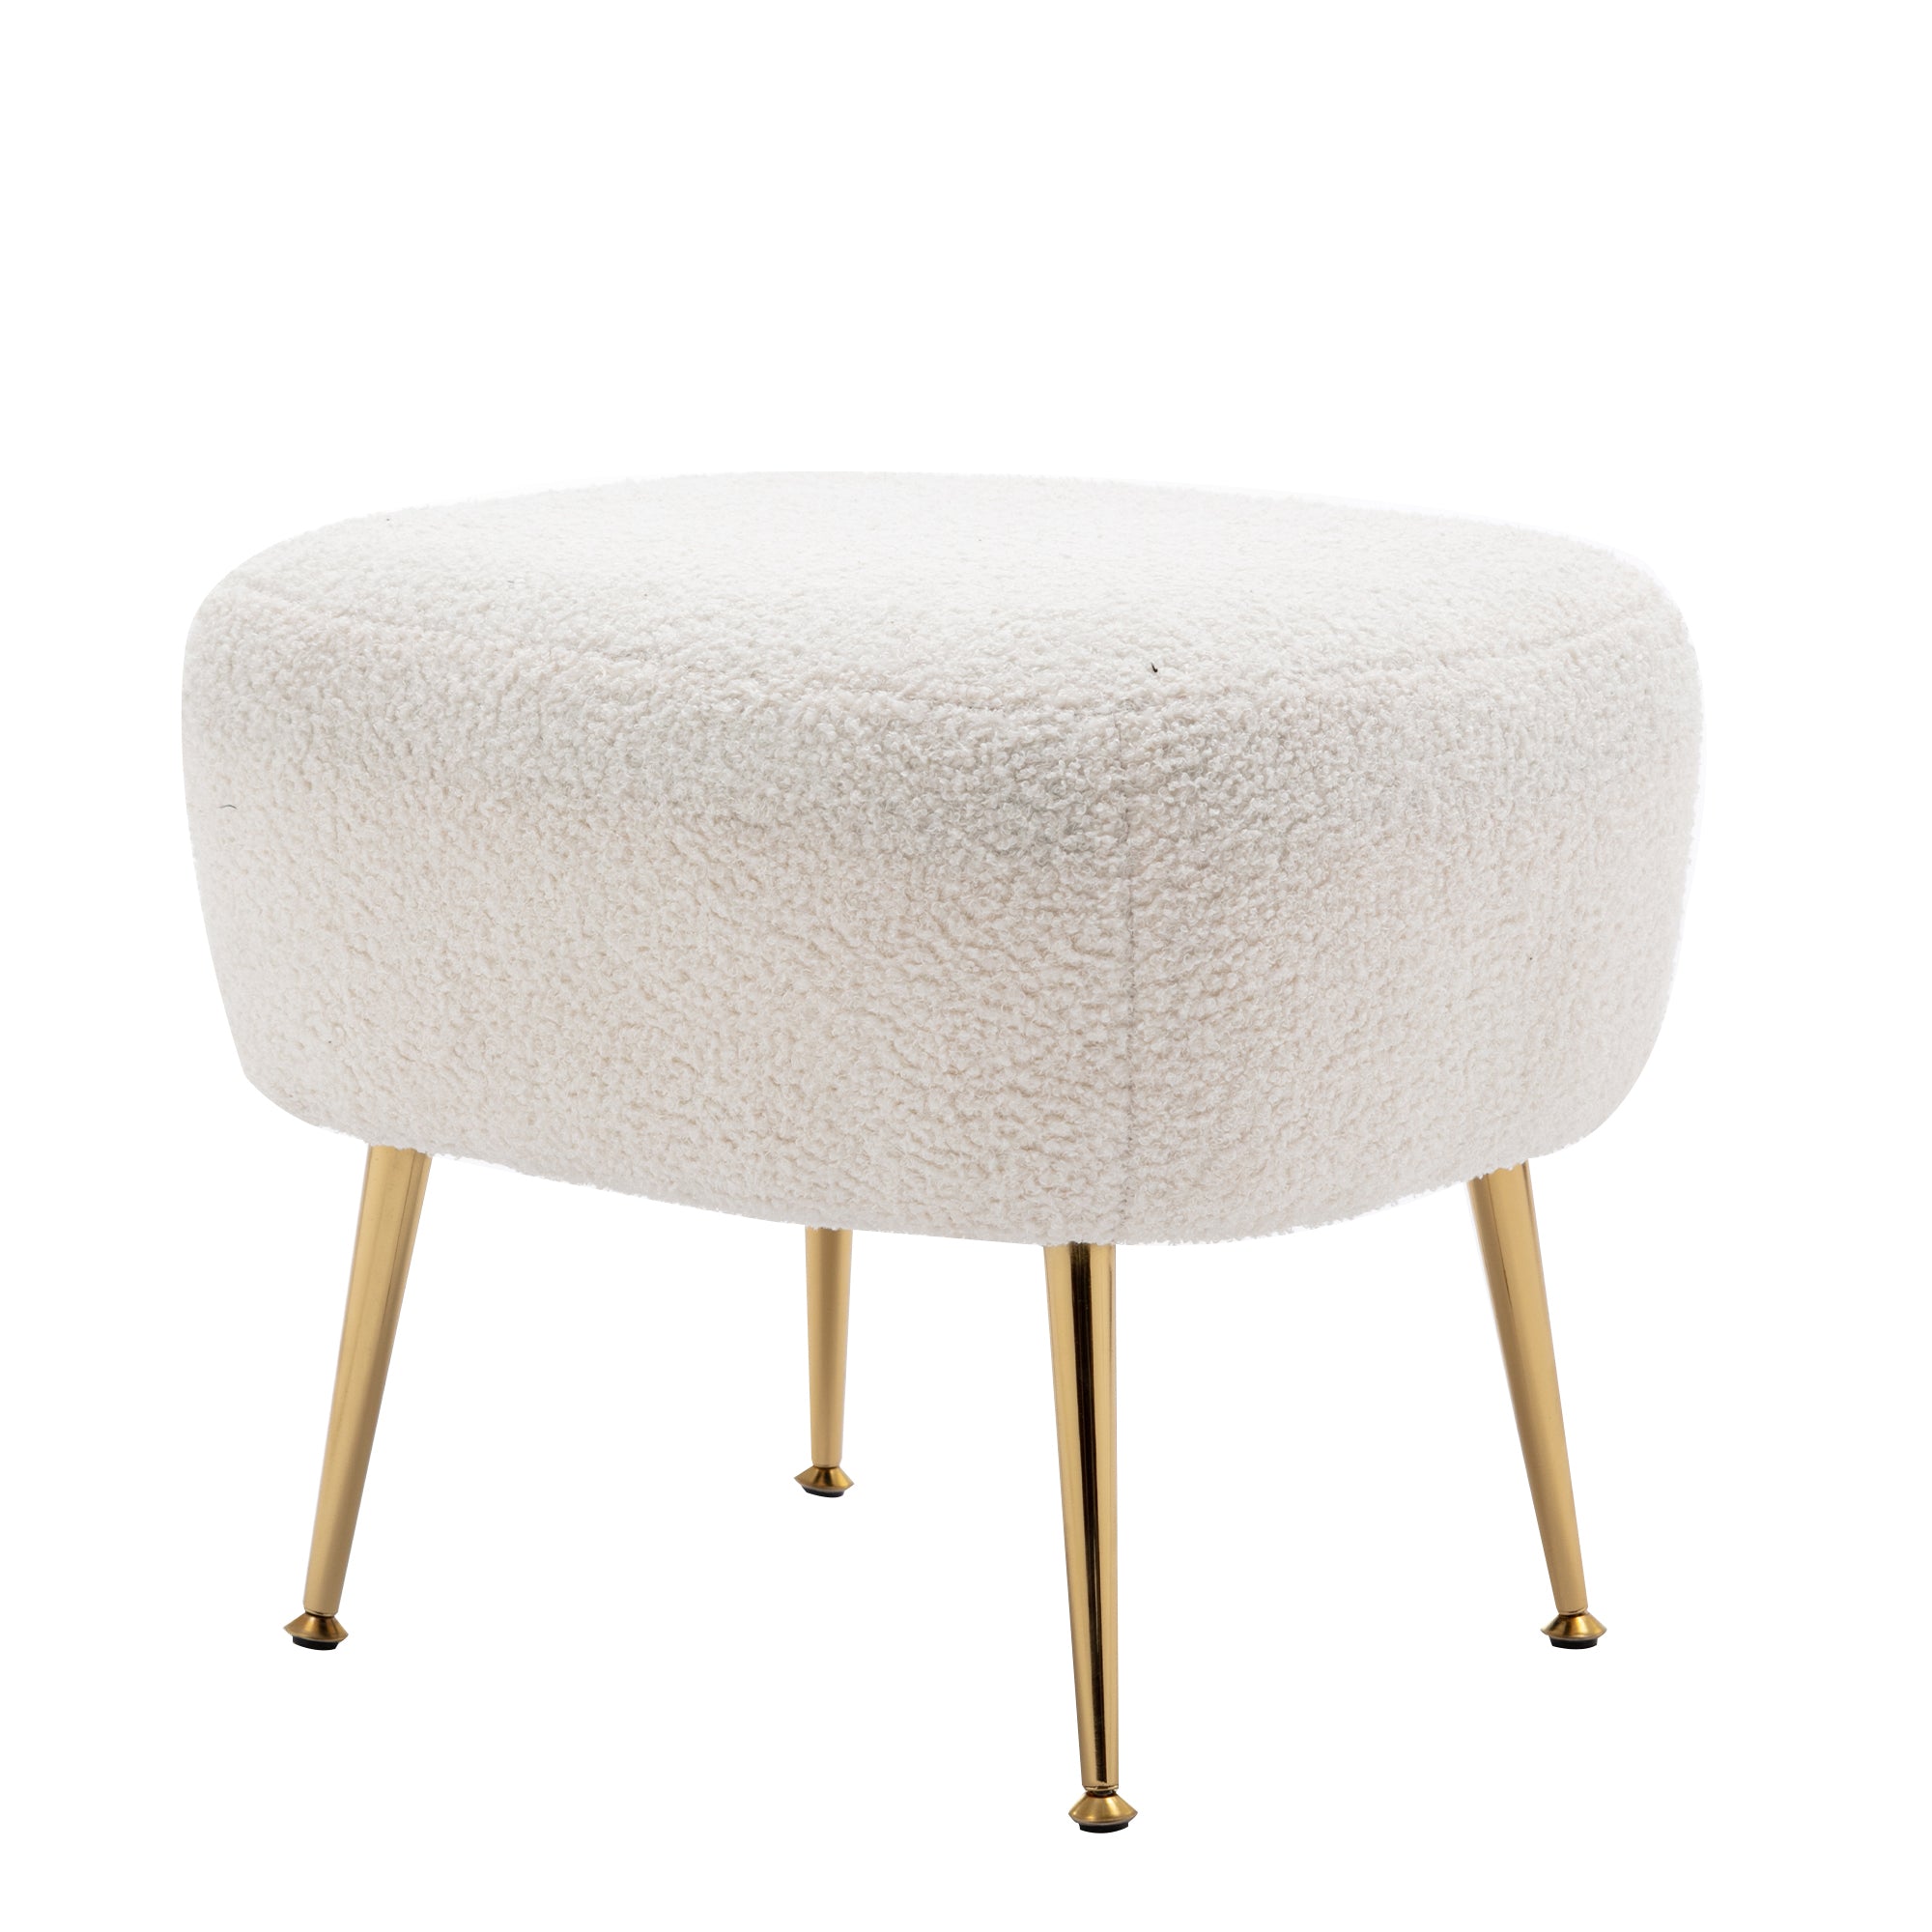 Orisfur. Modern Comfy Leisure Accent Chair, Teddy white-foam-altay velvet